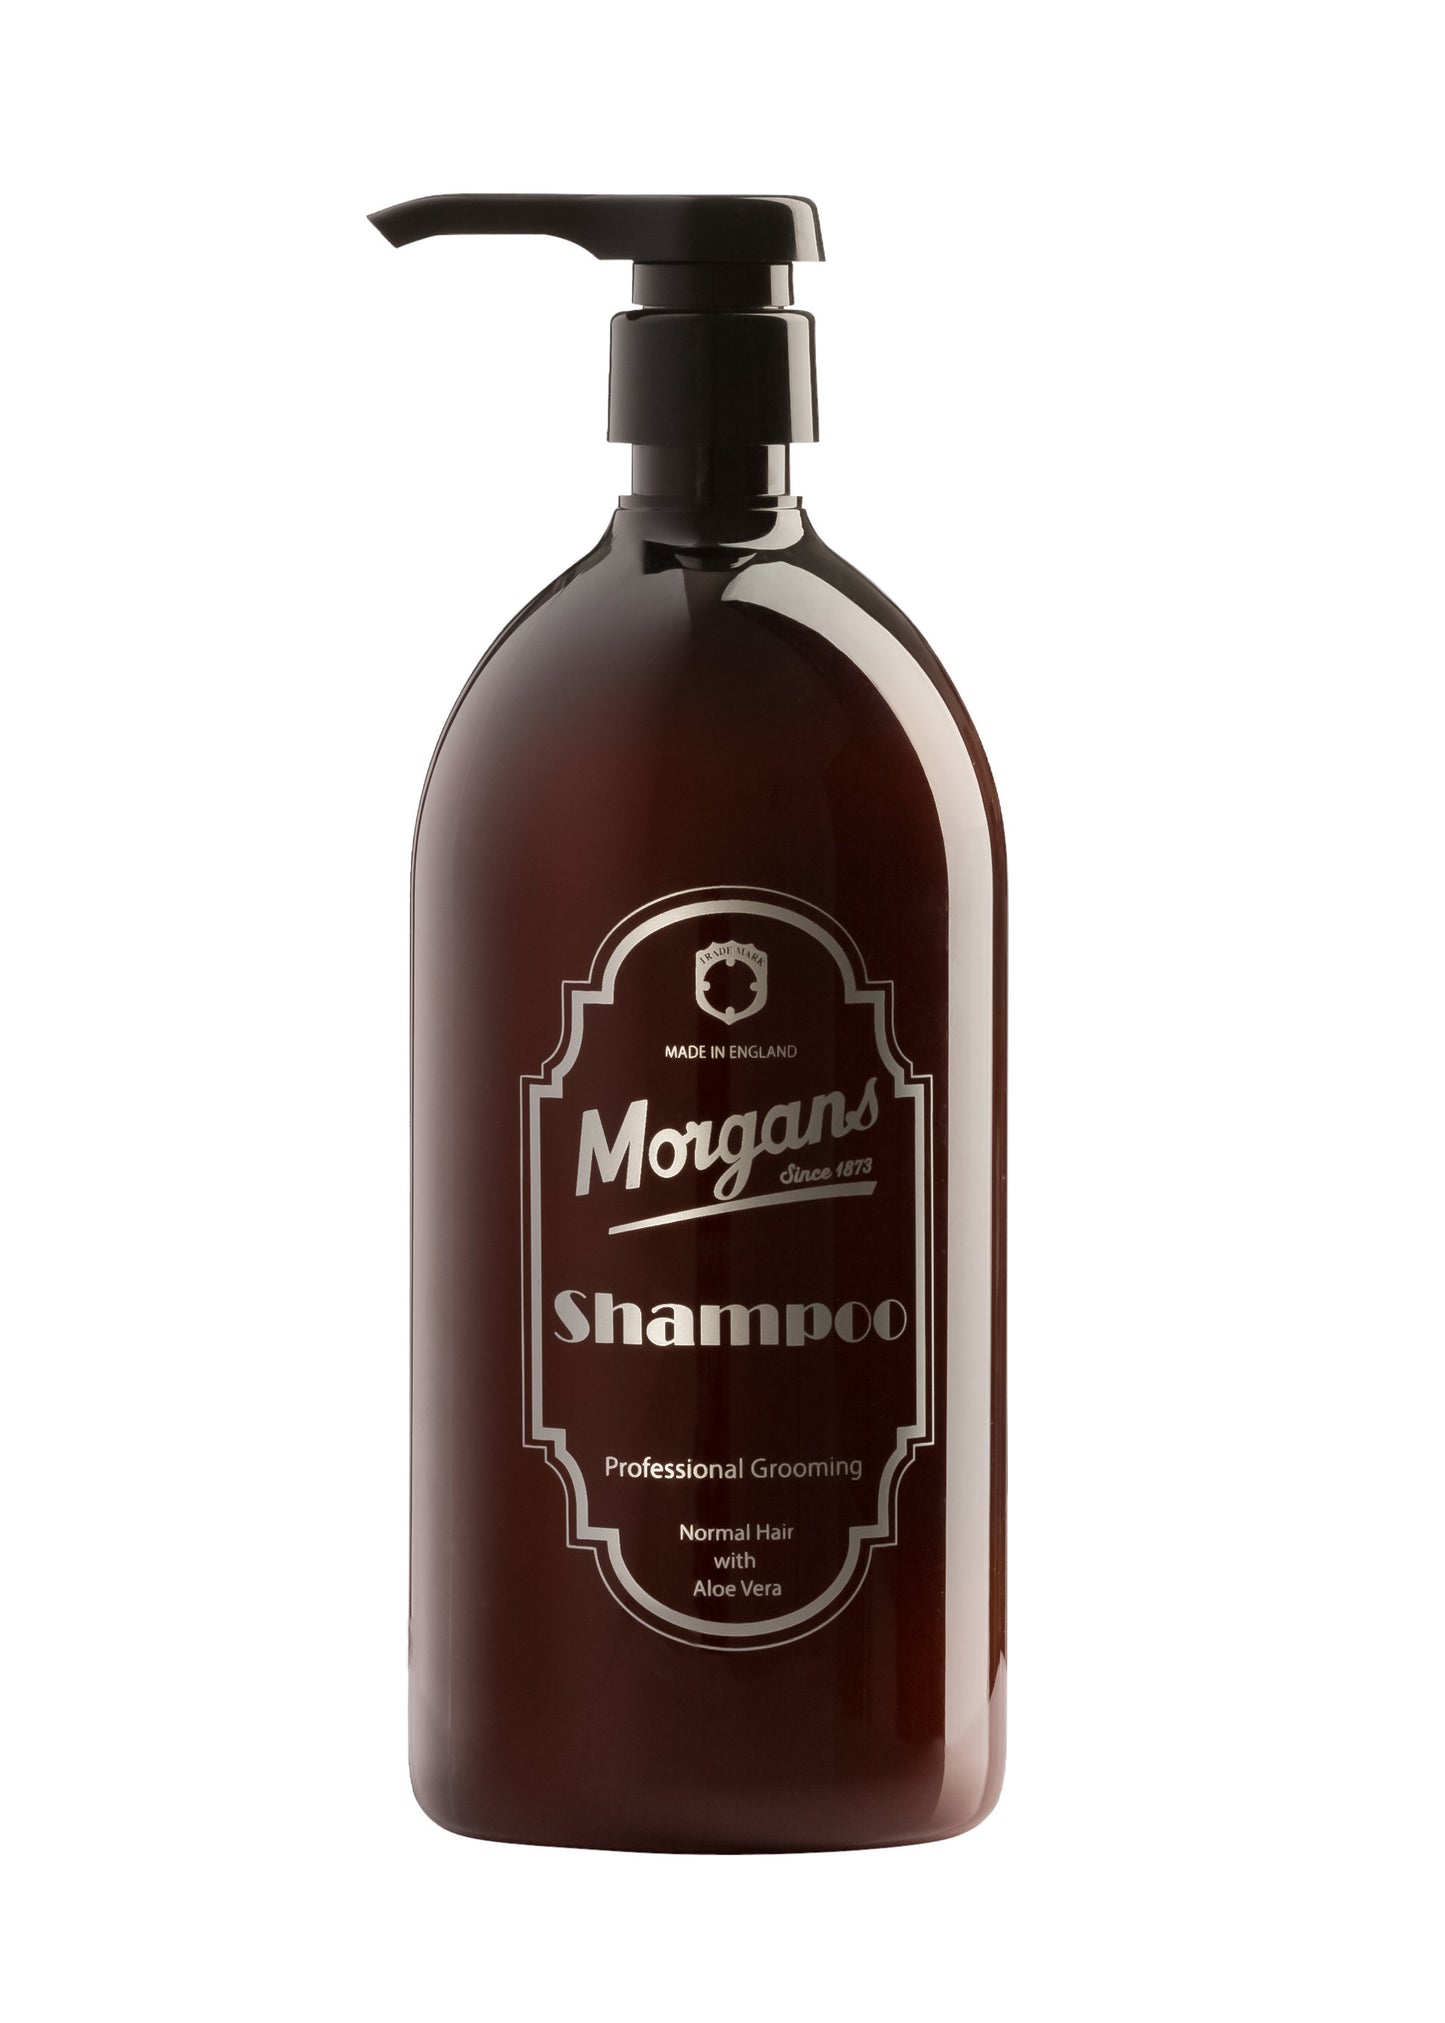 Morgan's Shampoo